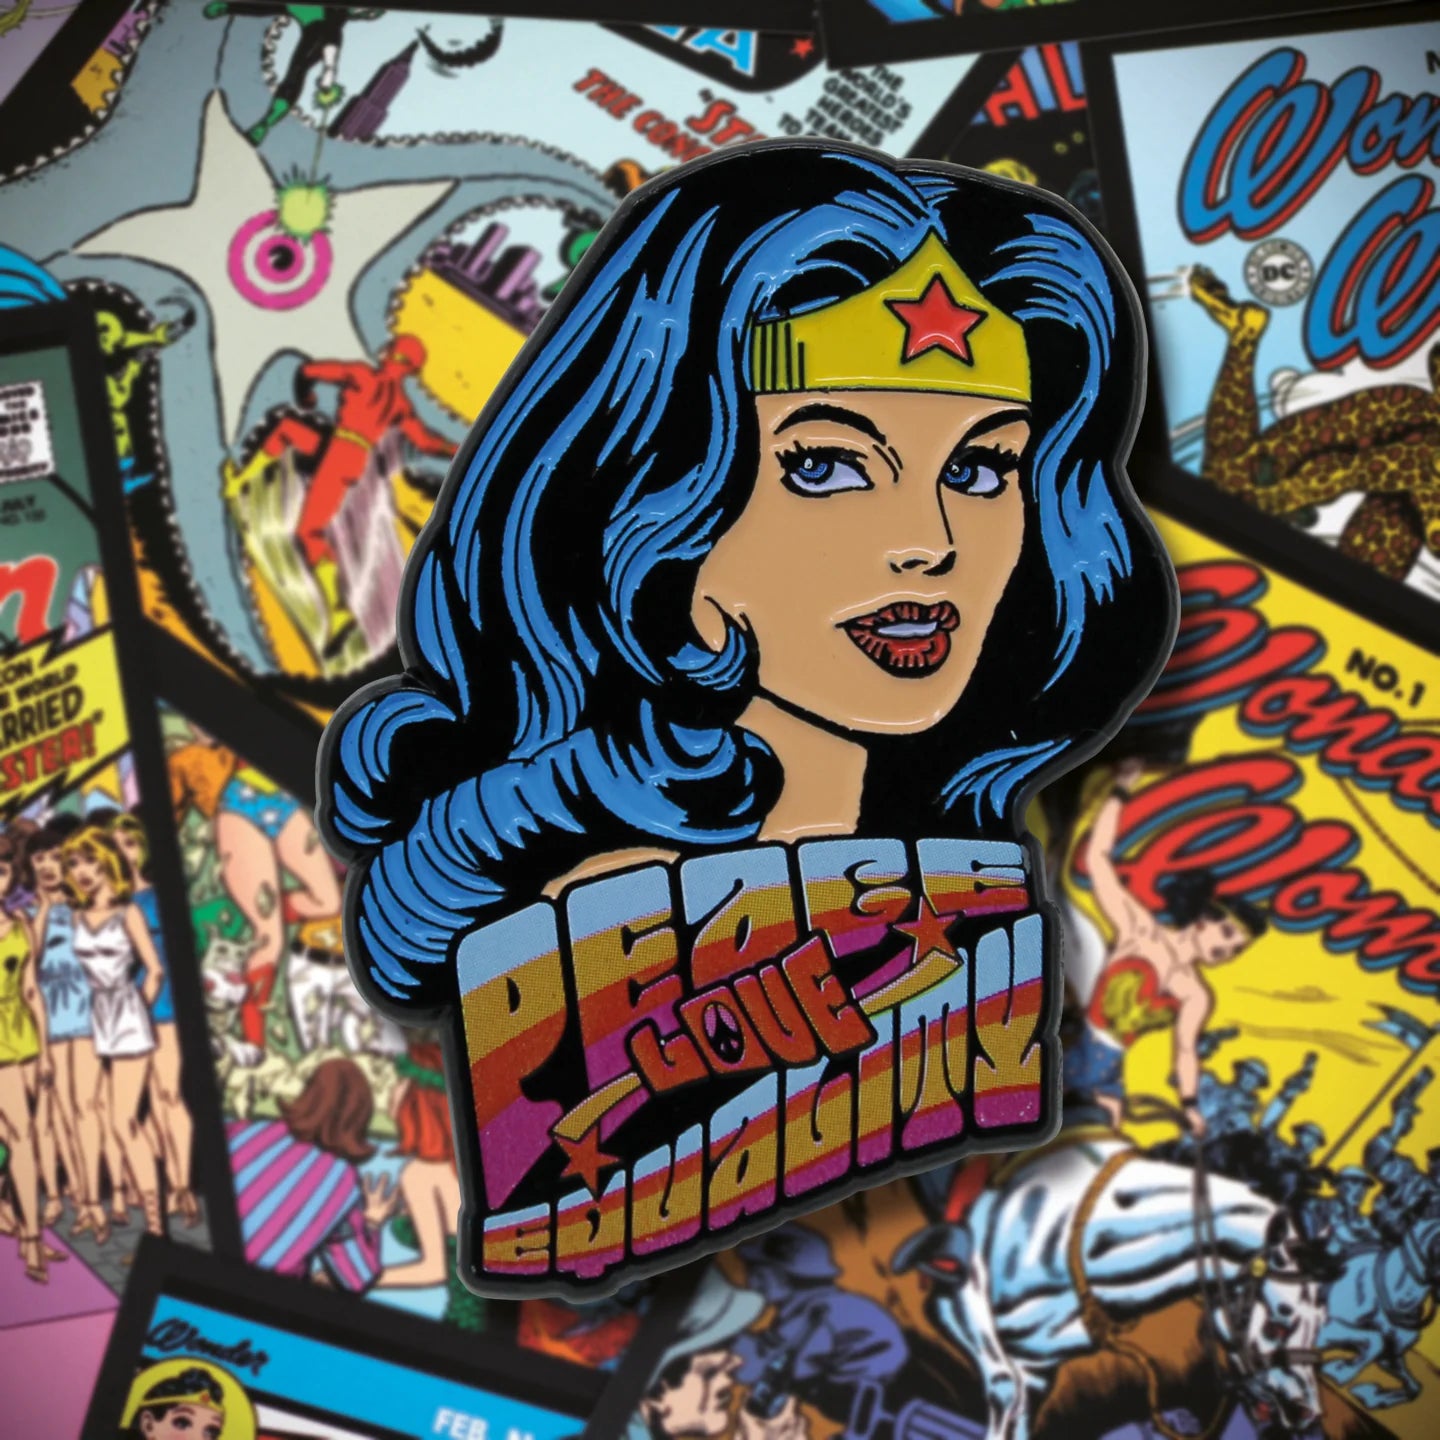 Wonder Woman Limited Edition Pin Badge